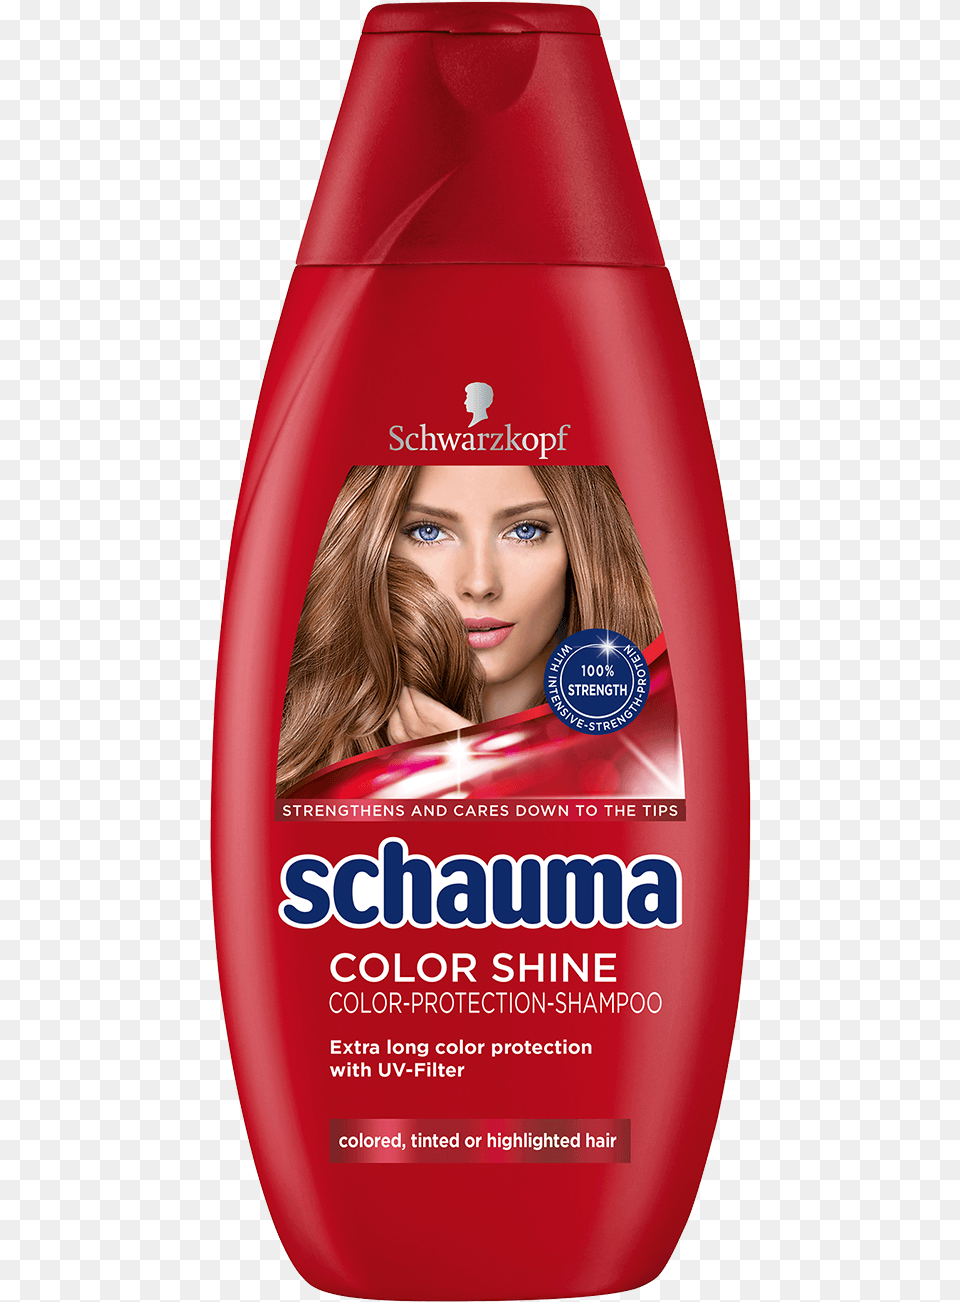 Schauma Color Shine Download Schauma Color Shine, Bottle, Lotion, Shampoo, Adult Png Image